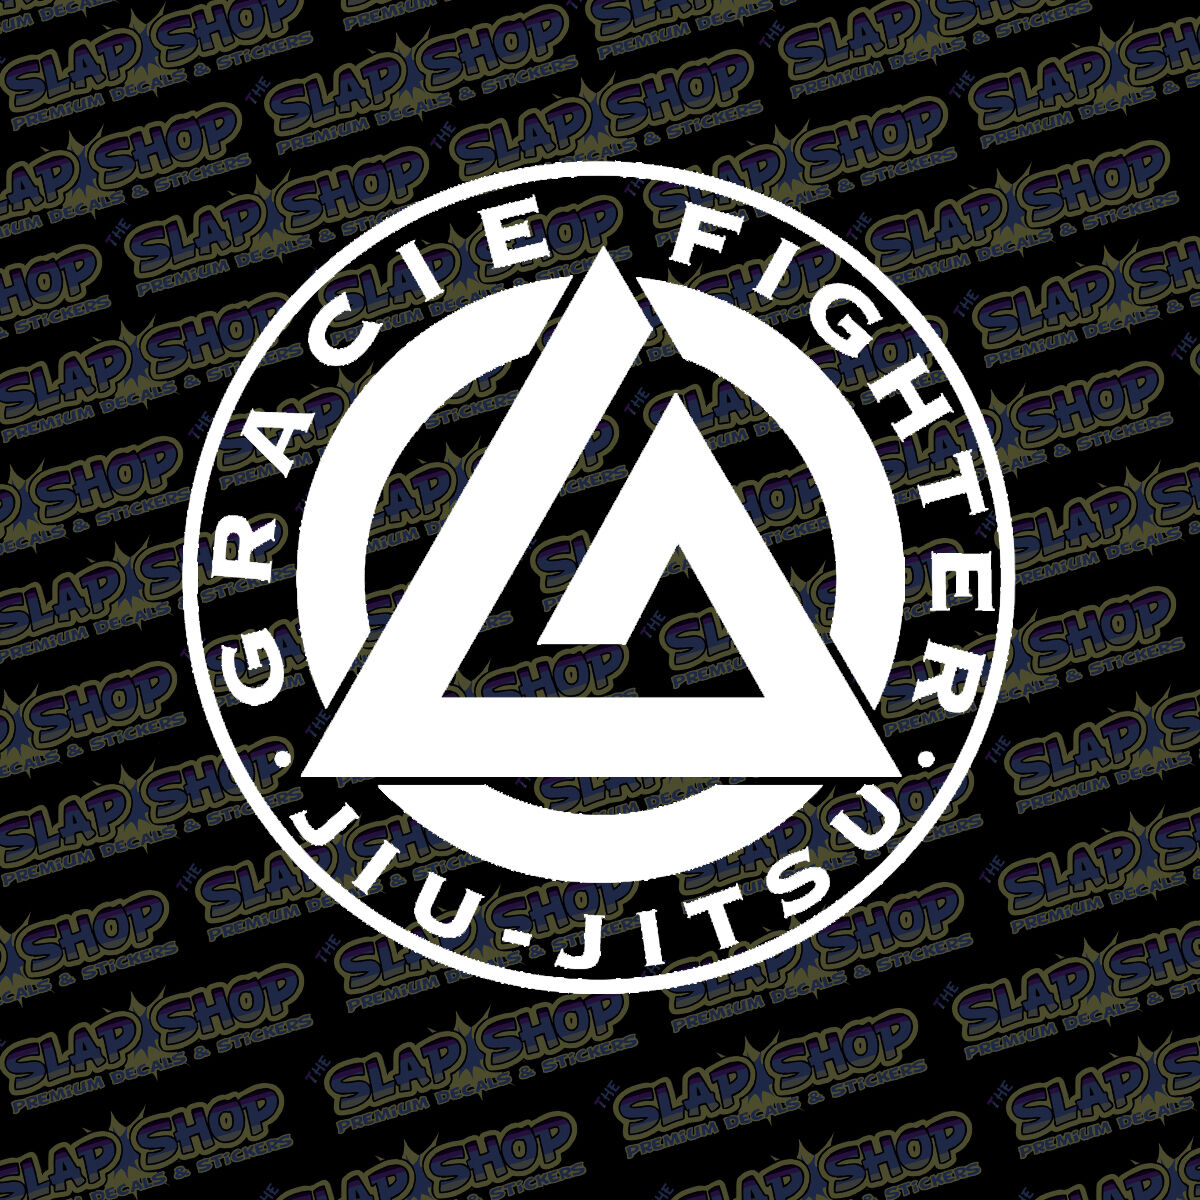 Gracie Fighter Jiu Jitsu Rio De Janeiro BJJ martial arts MMA Car Vinyl Decal 